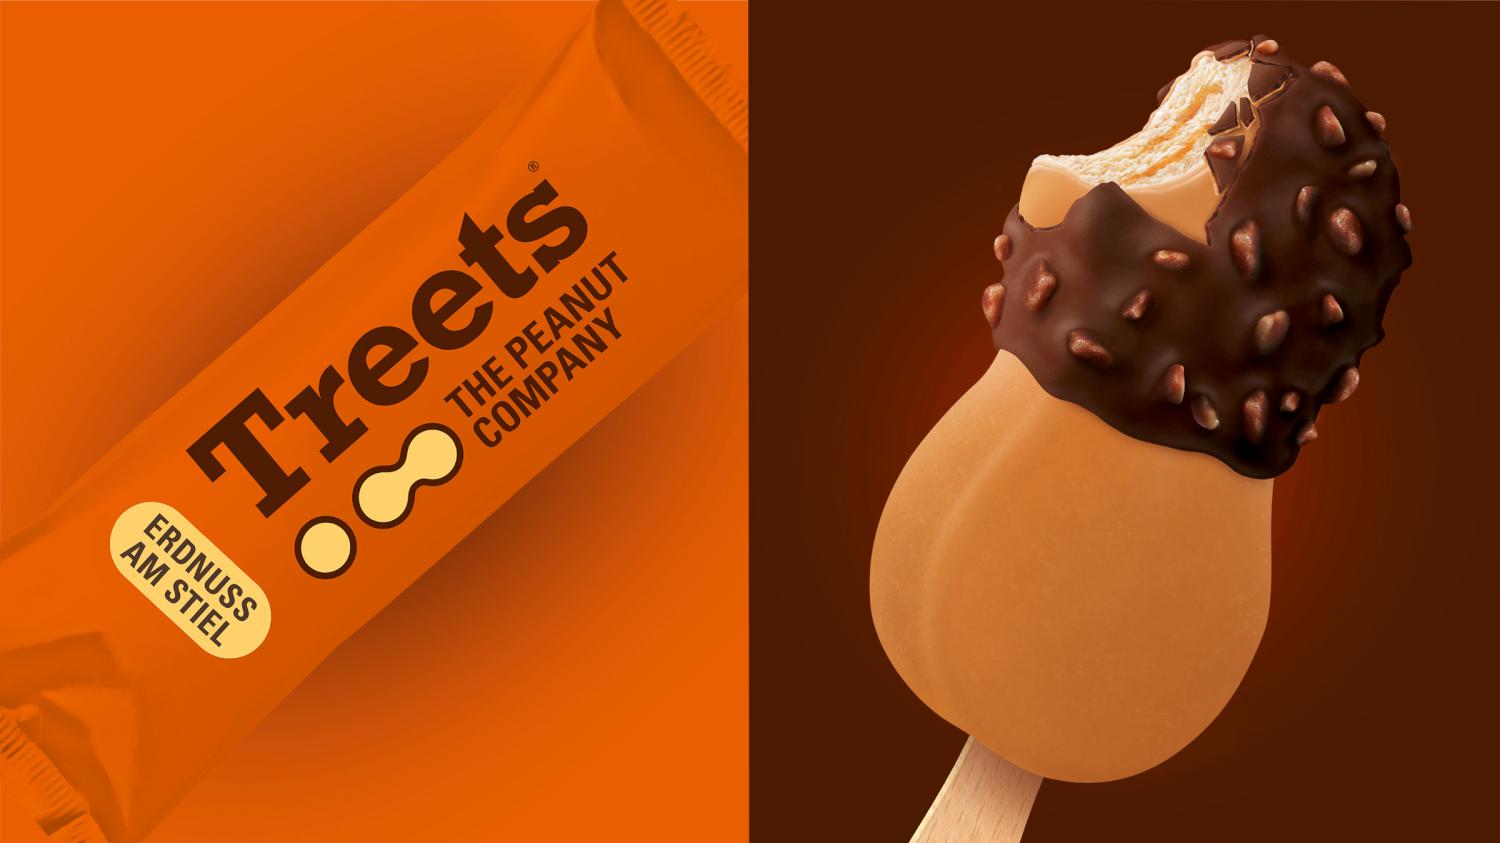 Treets Peanut Company Eis Launch Grafikdesign Branding-Strategie Verpackungsdesign Logodesign Line Extension